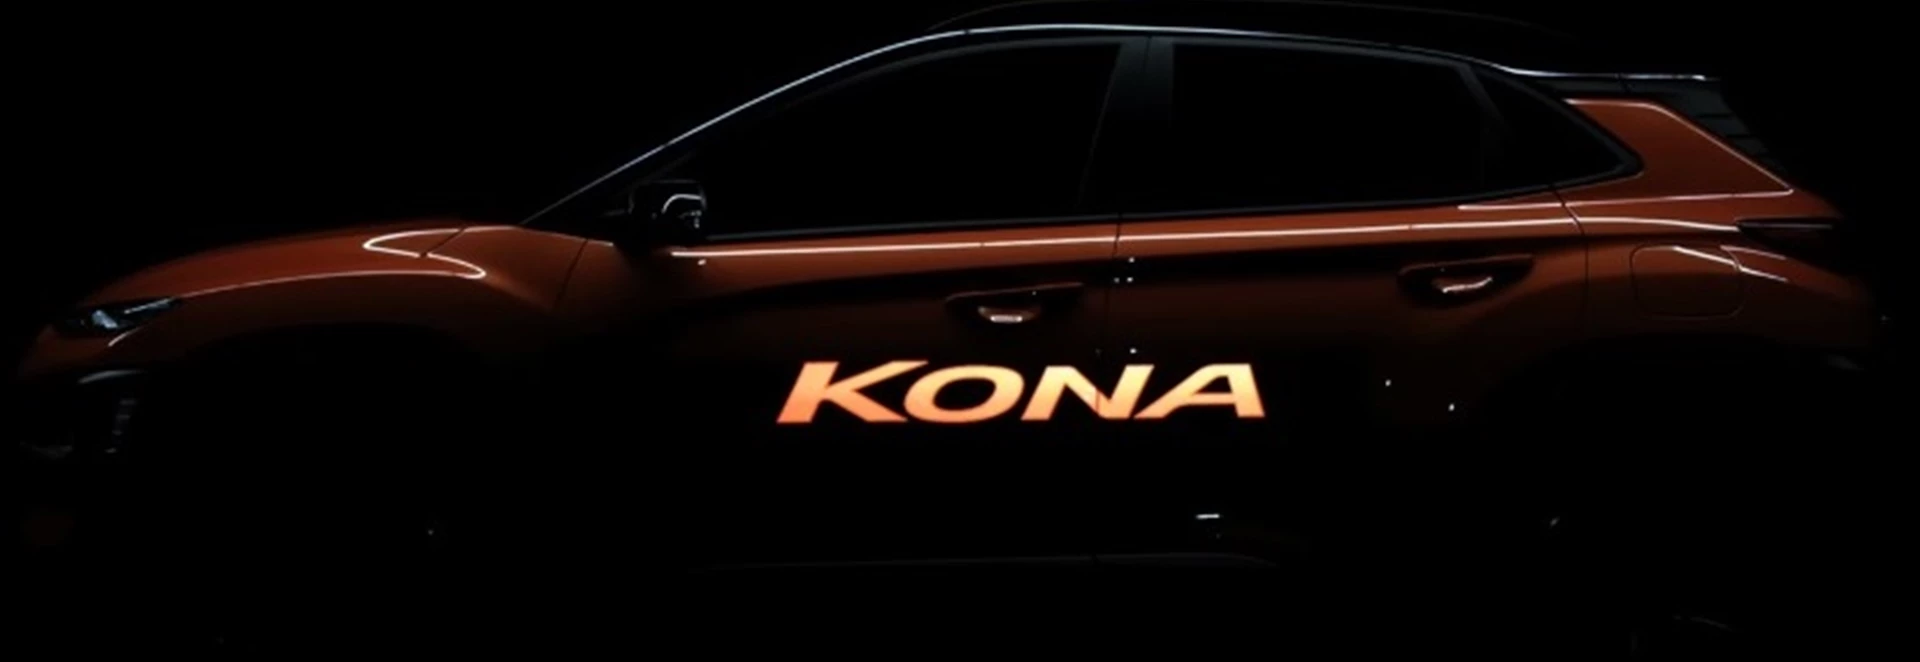 Hyundai is making a mini-SUV called the Kona